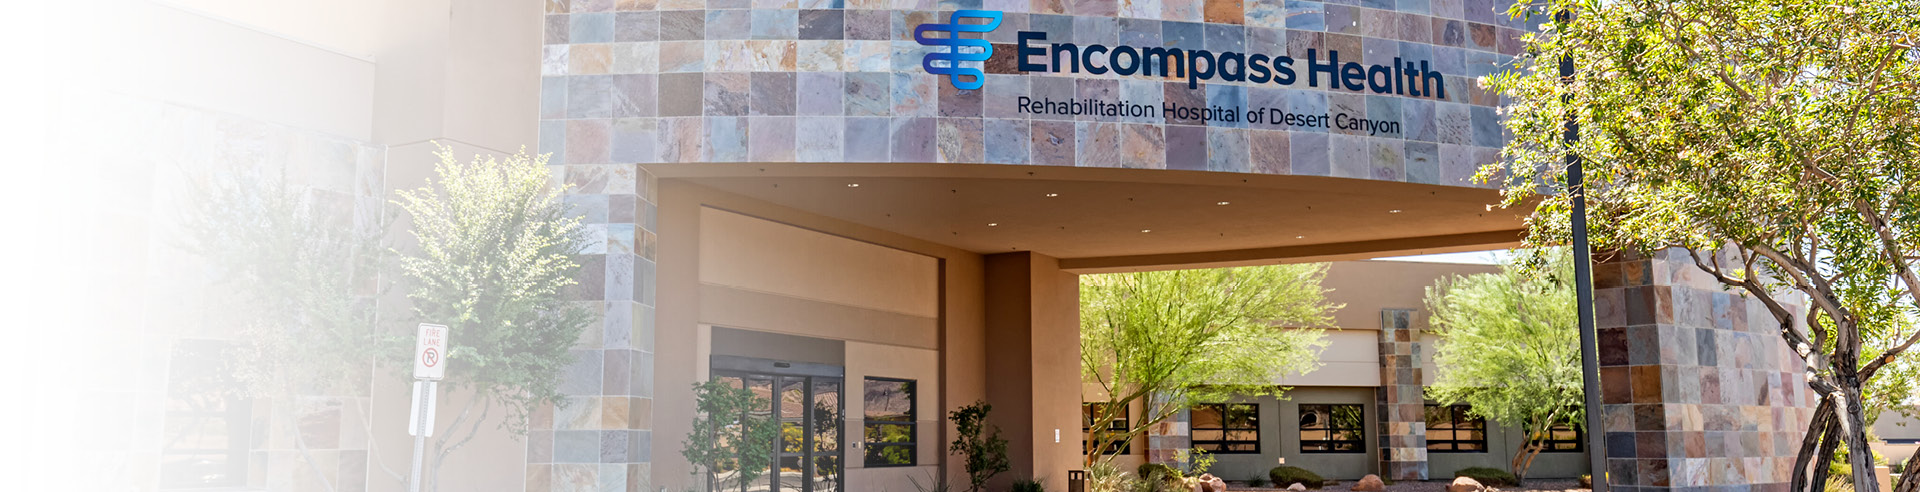 Encompass Health Rehabilitation Hospital of Desert Canyon exterior